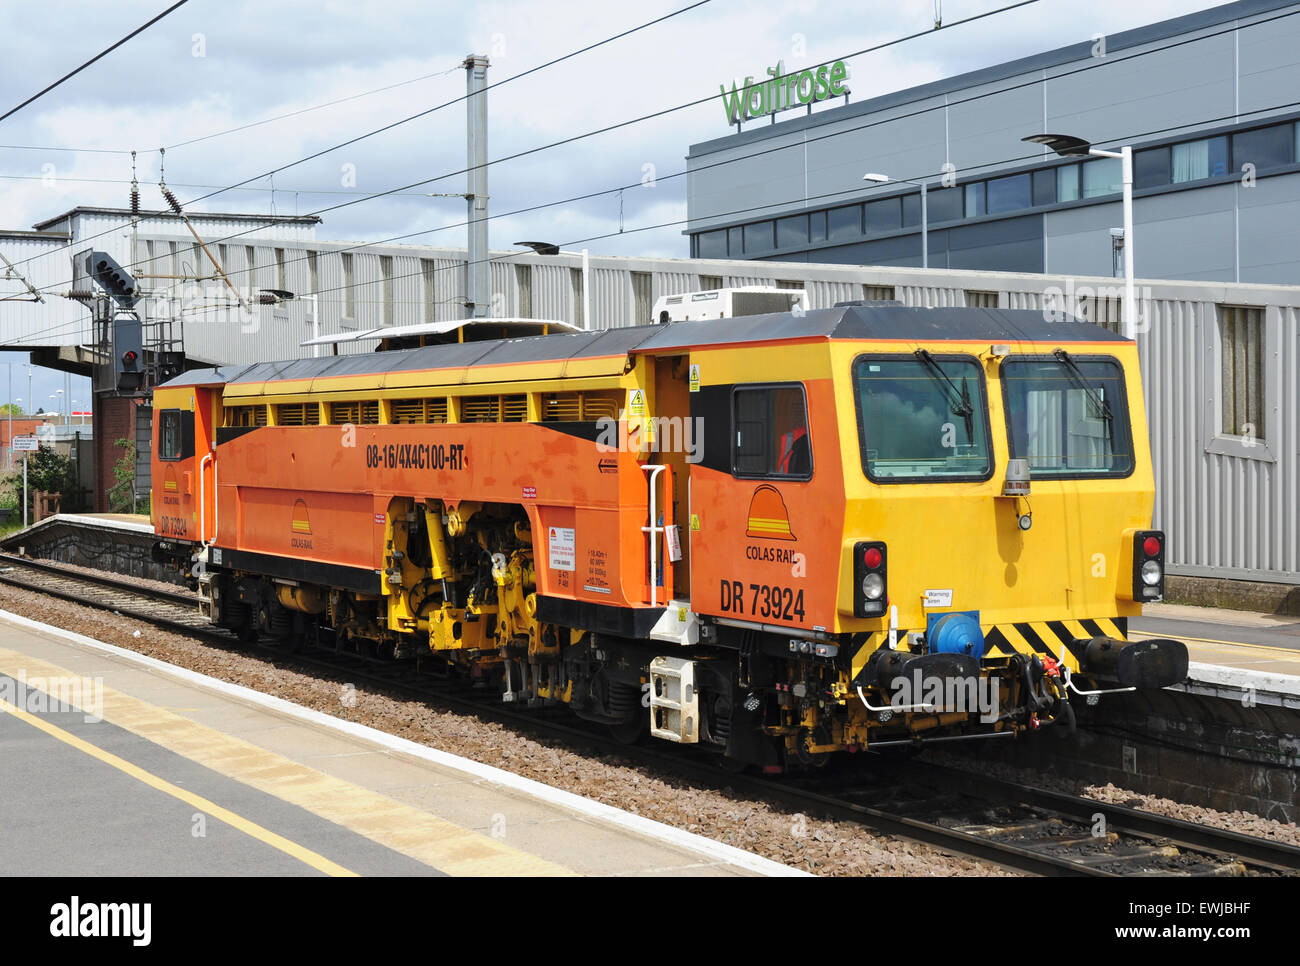 Colas Rail track ballast tamper machine No. DR 73924 at Peterborough station, Cambridgeshire, England, UK Stock Photo